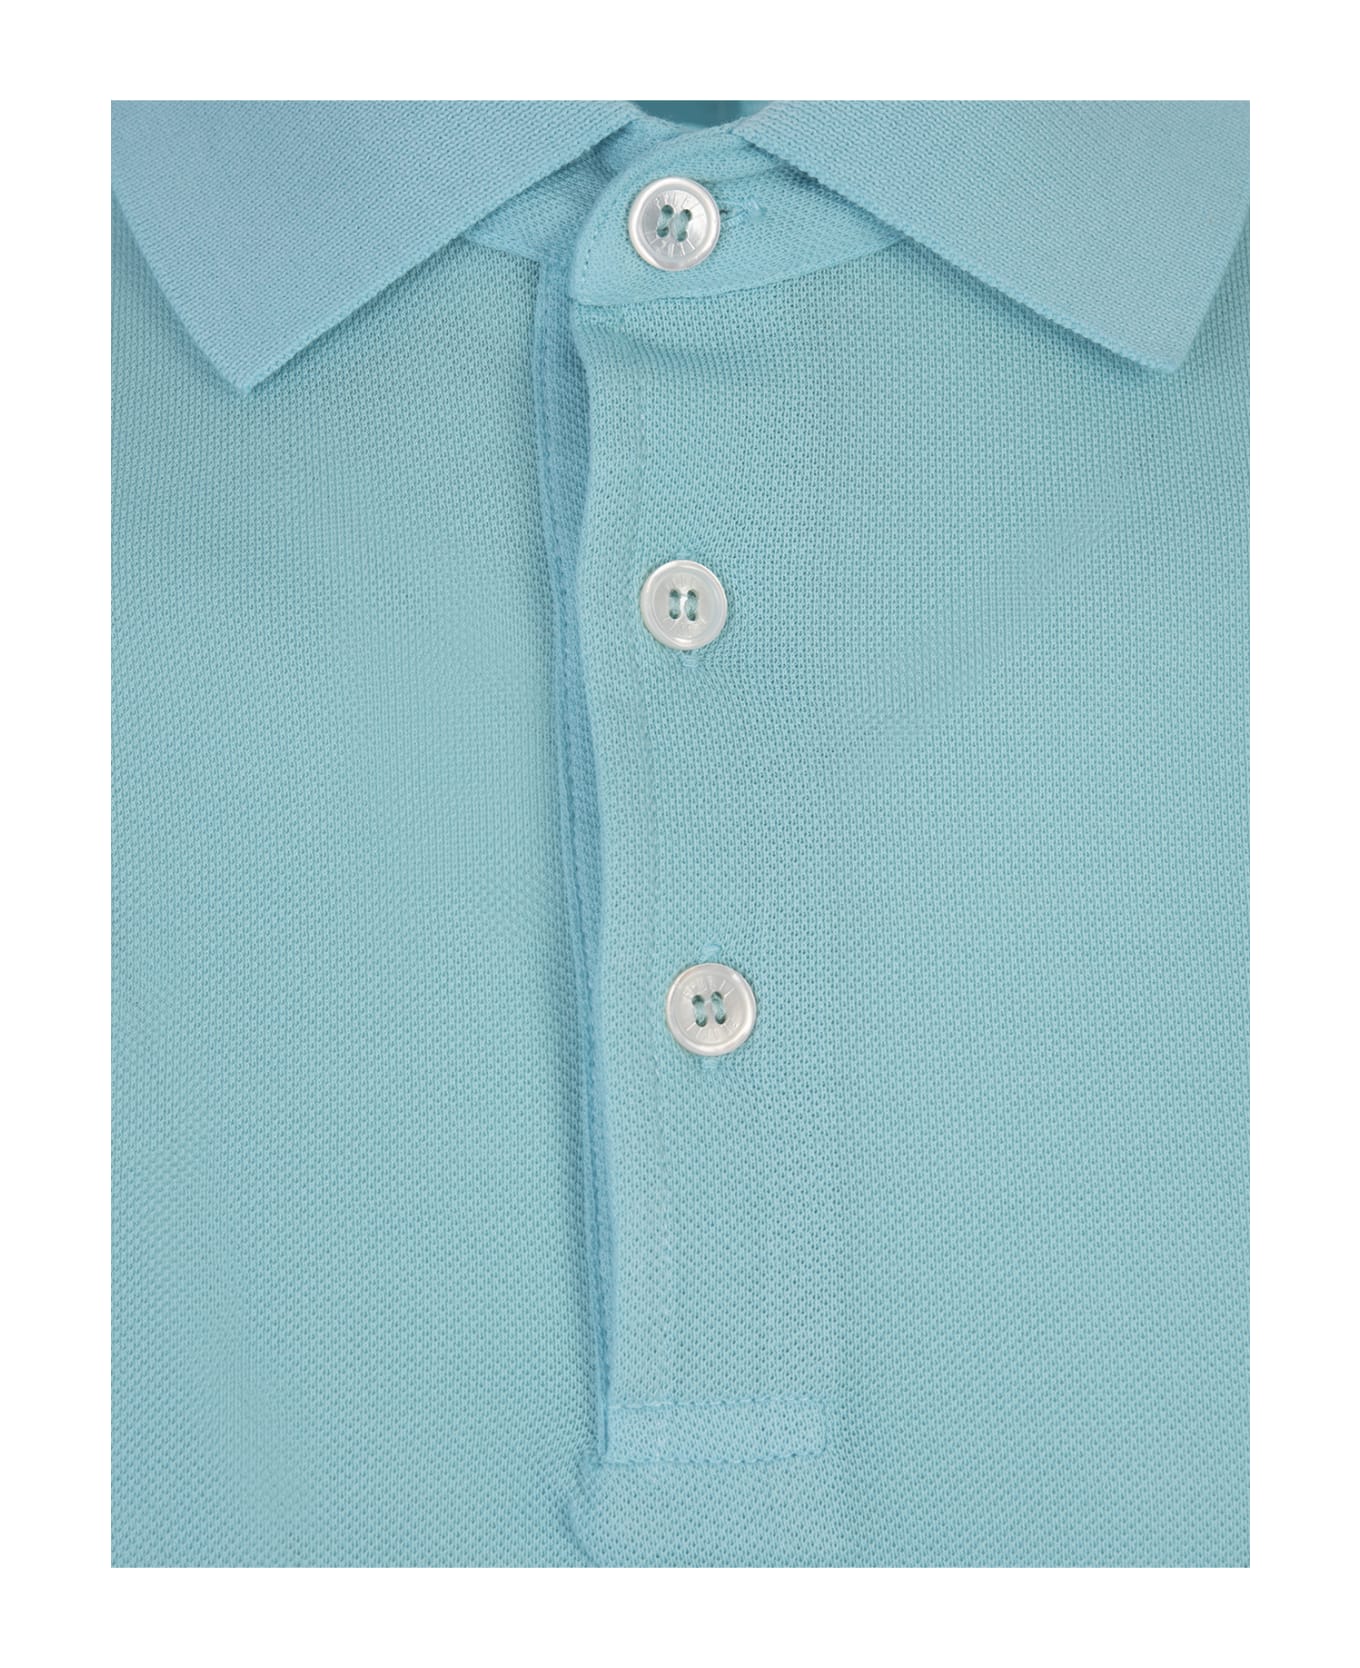 Fedeli Turquoise Light Cotton Piquet Polo Shirt - Blue ポロシャツ